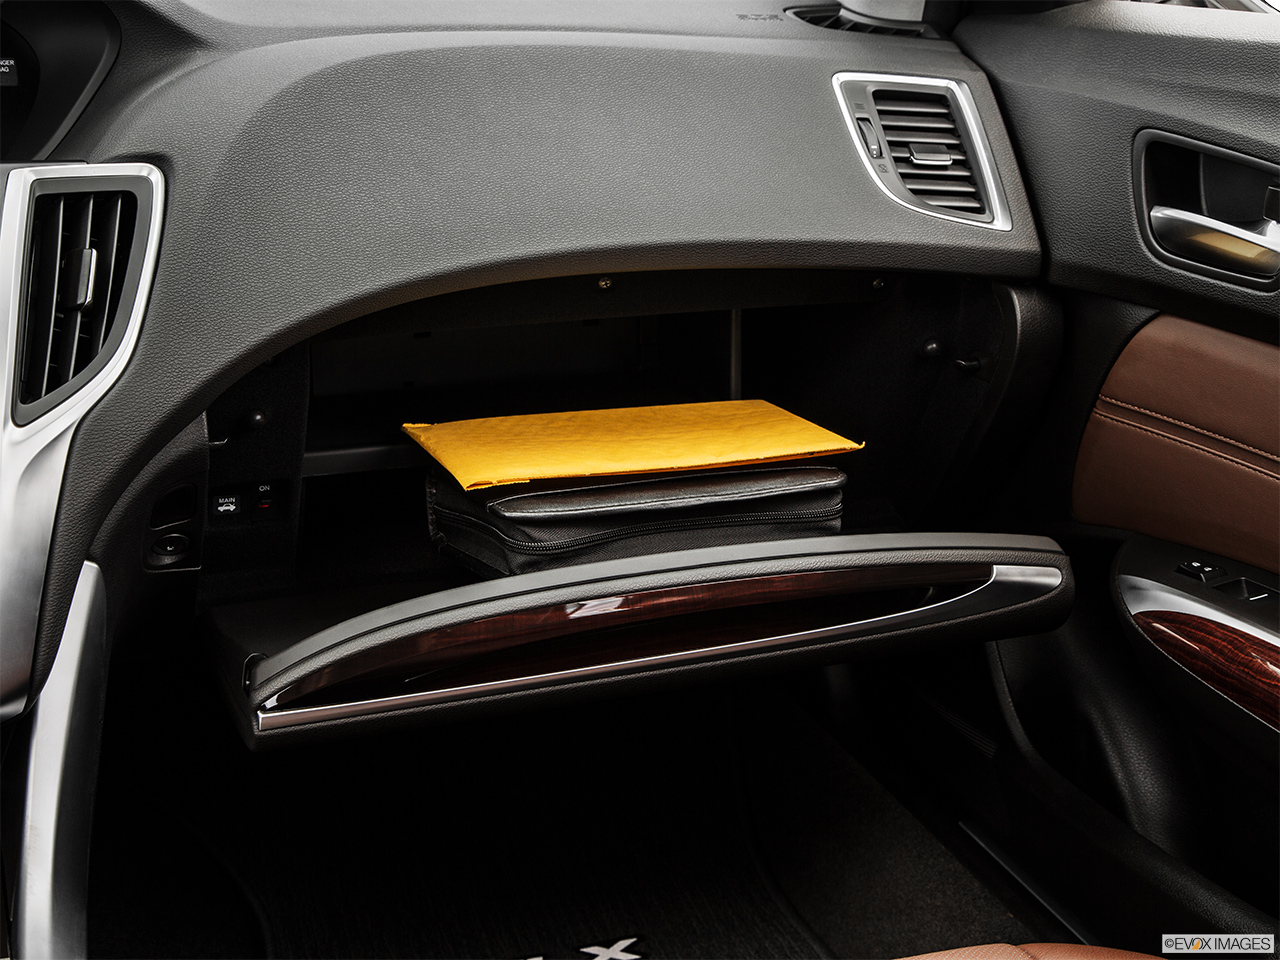 2015 Acura TLX 3.5 V-6 9-AT SH-AWD Glove box open. 